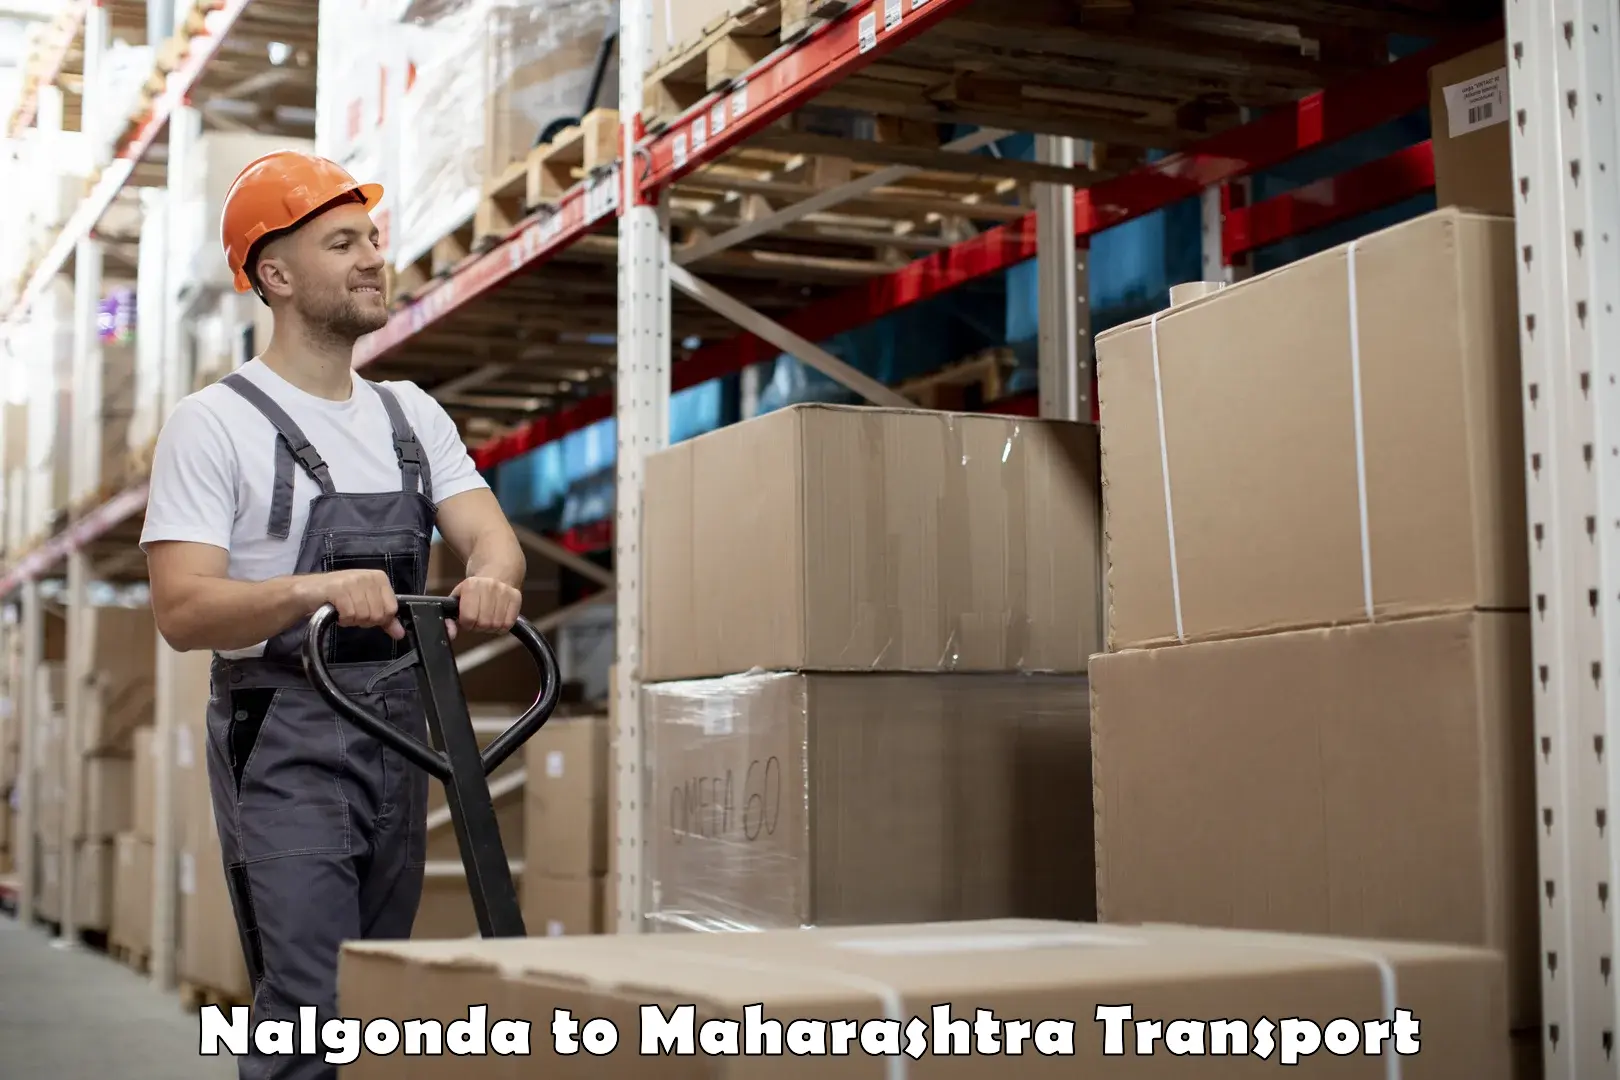 Truck transport companies in India Nalgonda to Akot